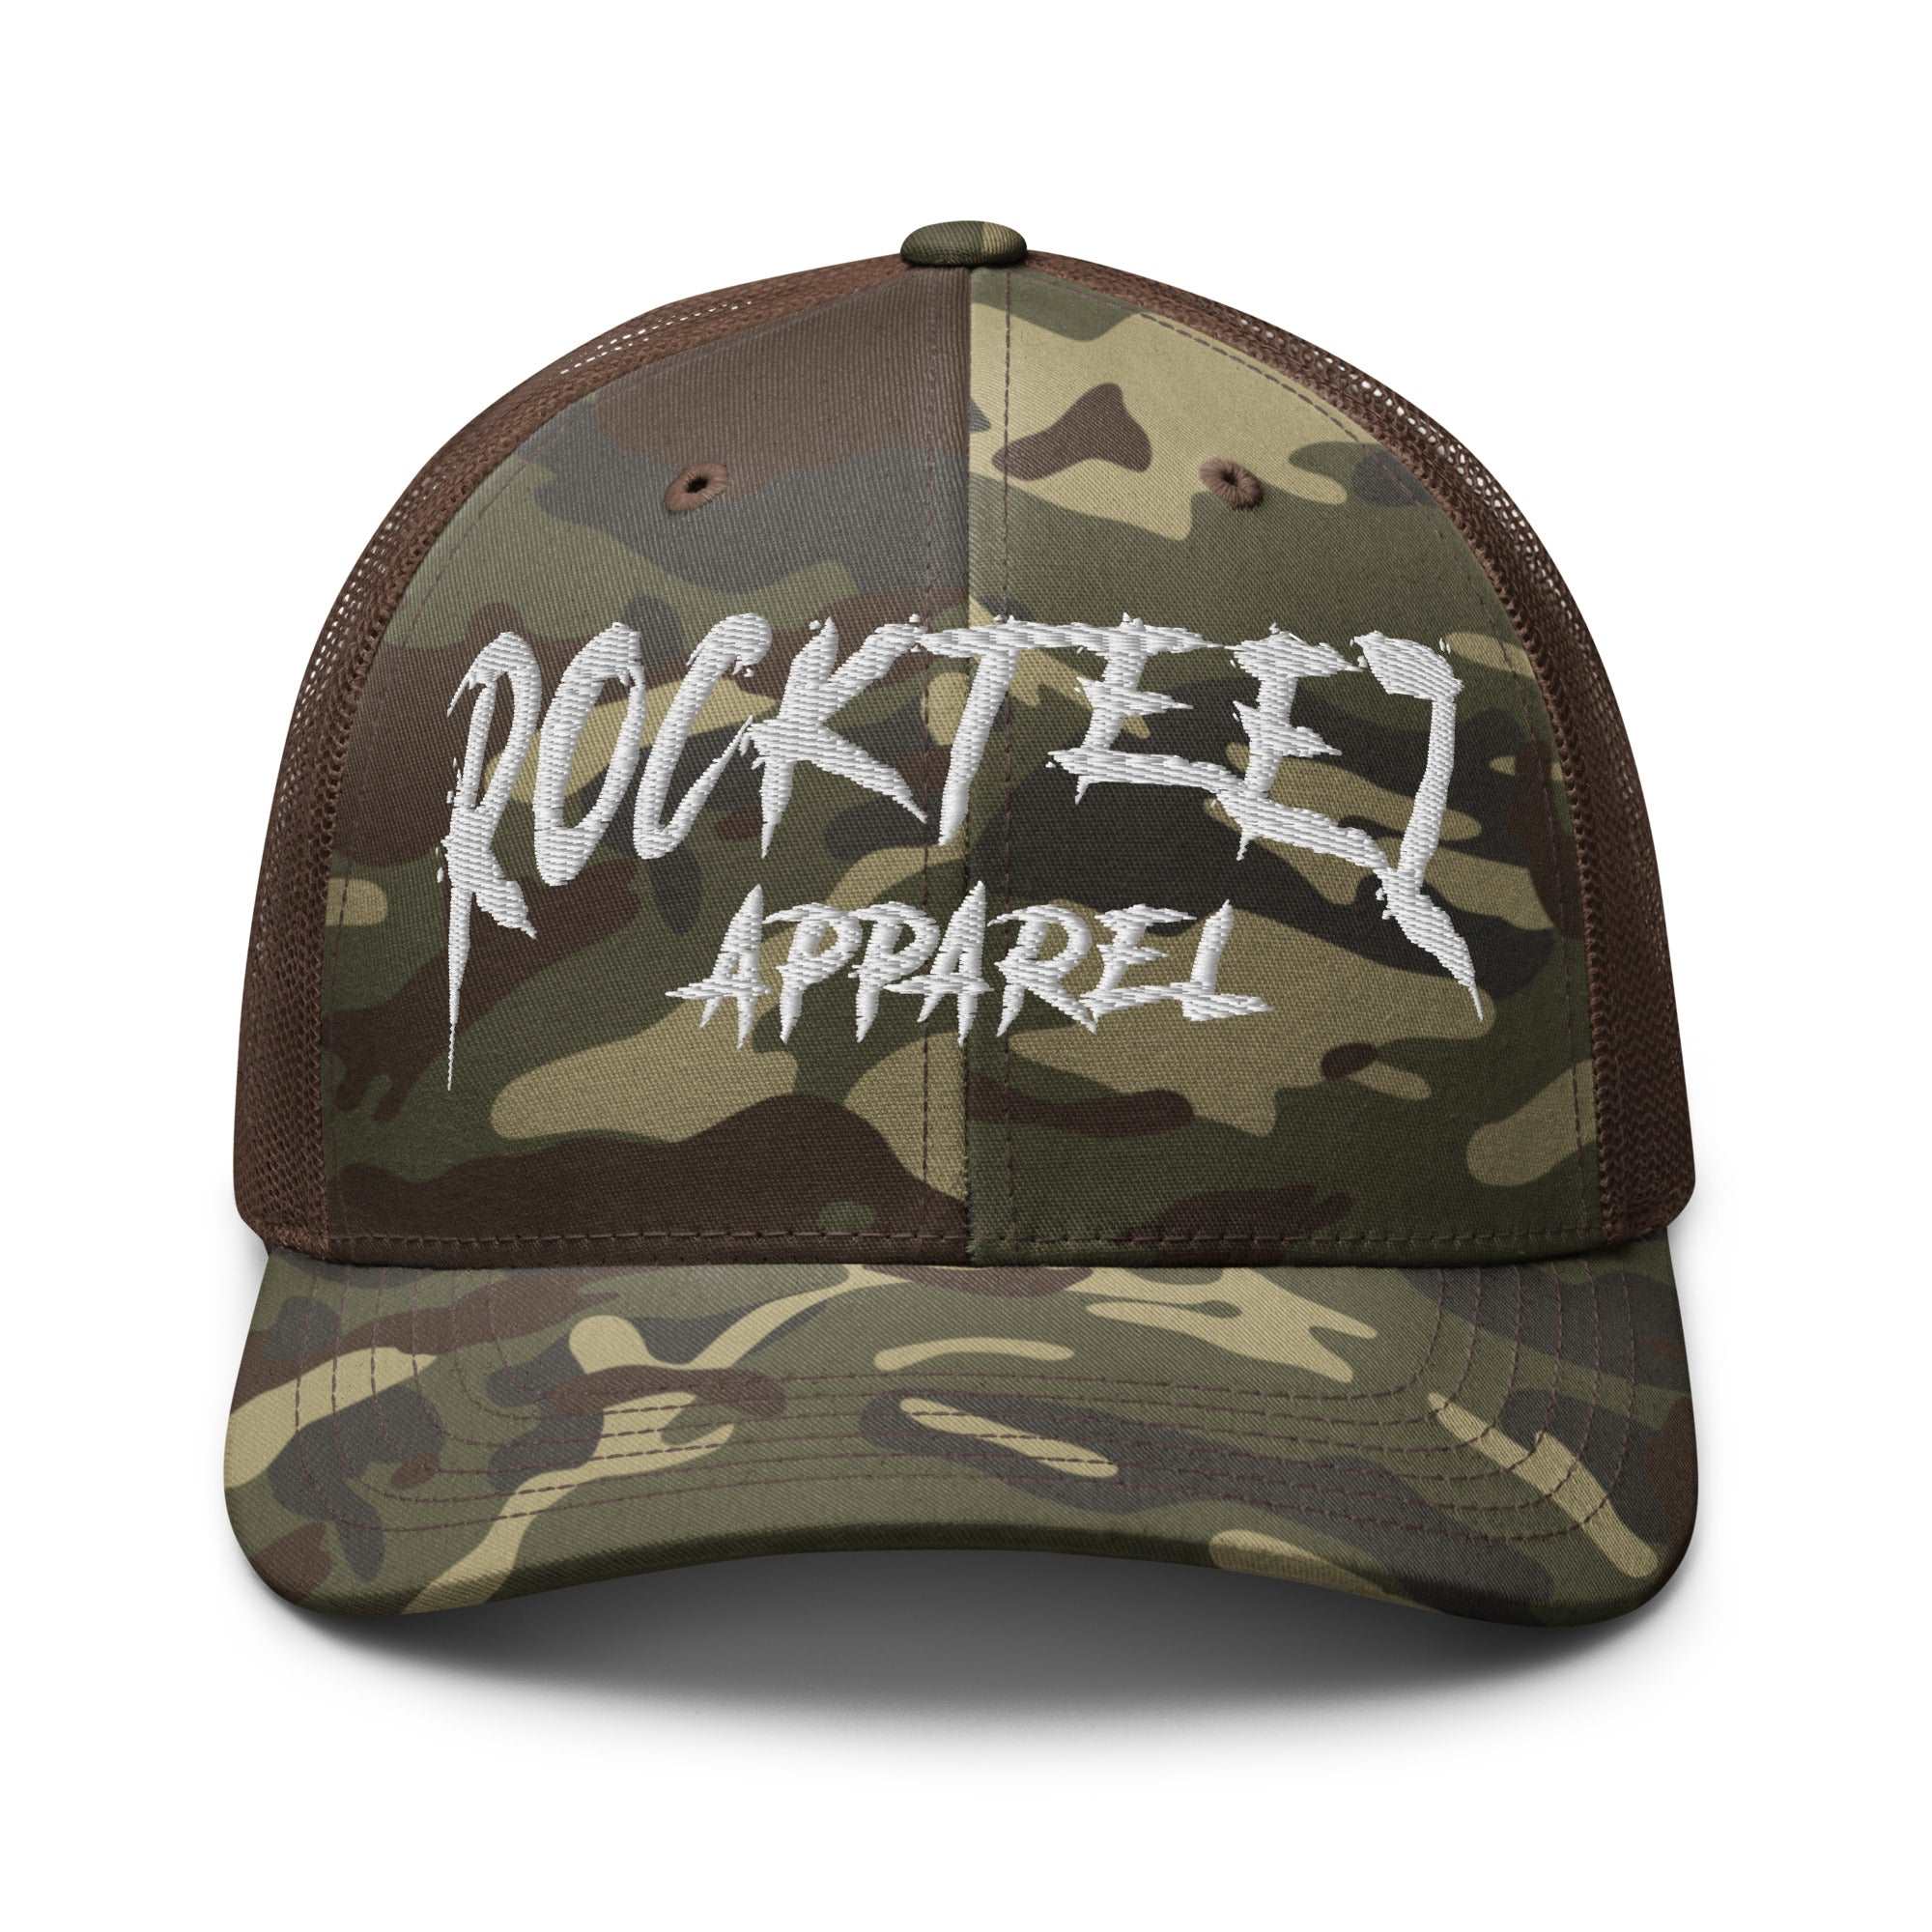 Rockteez Apparel Camouflage Trucker Hat White